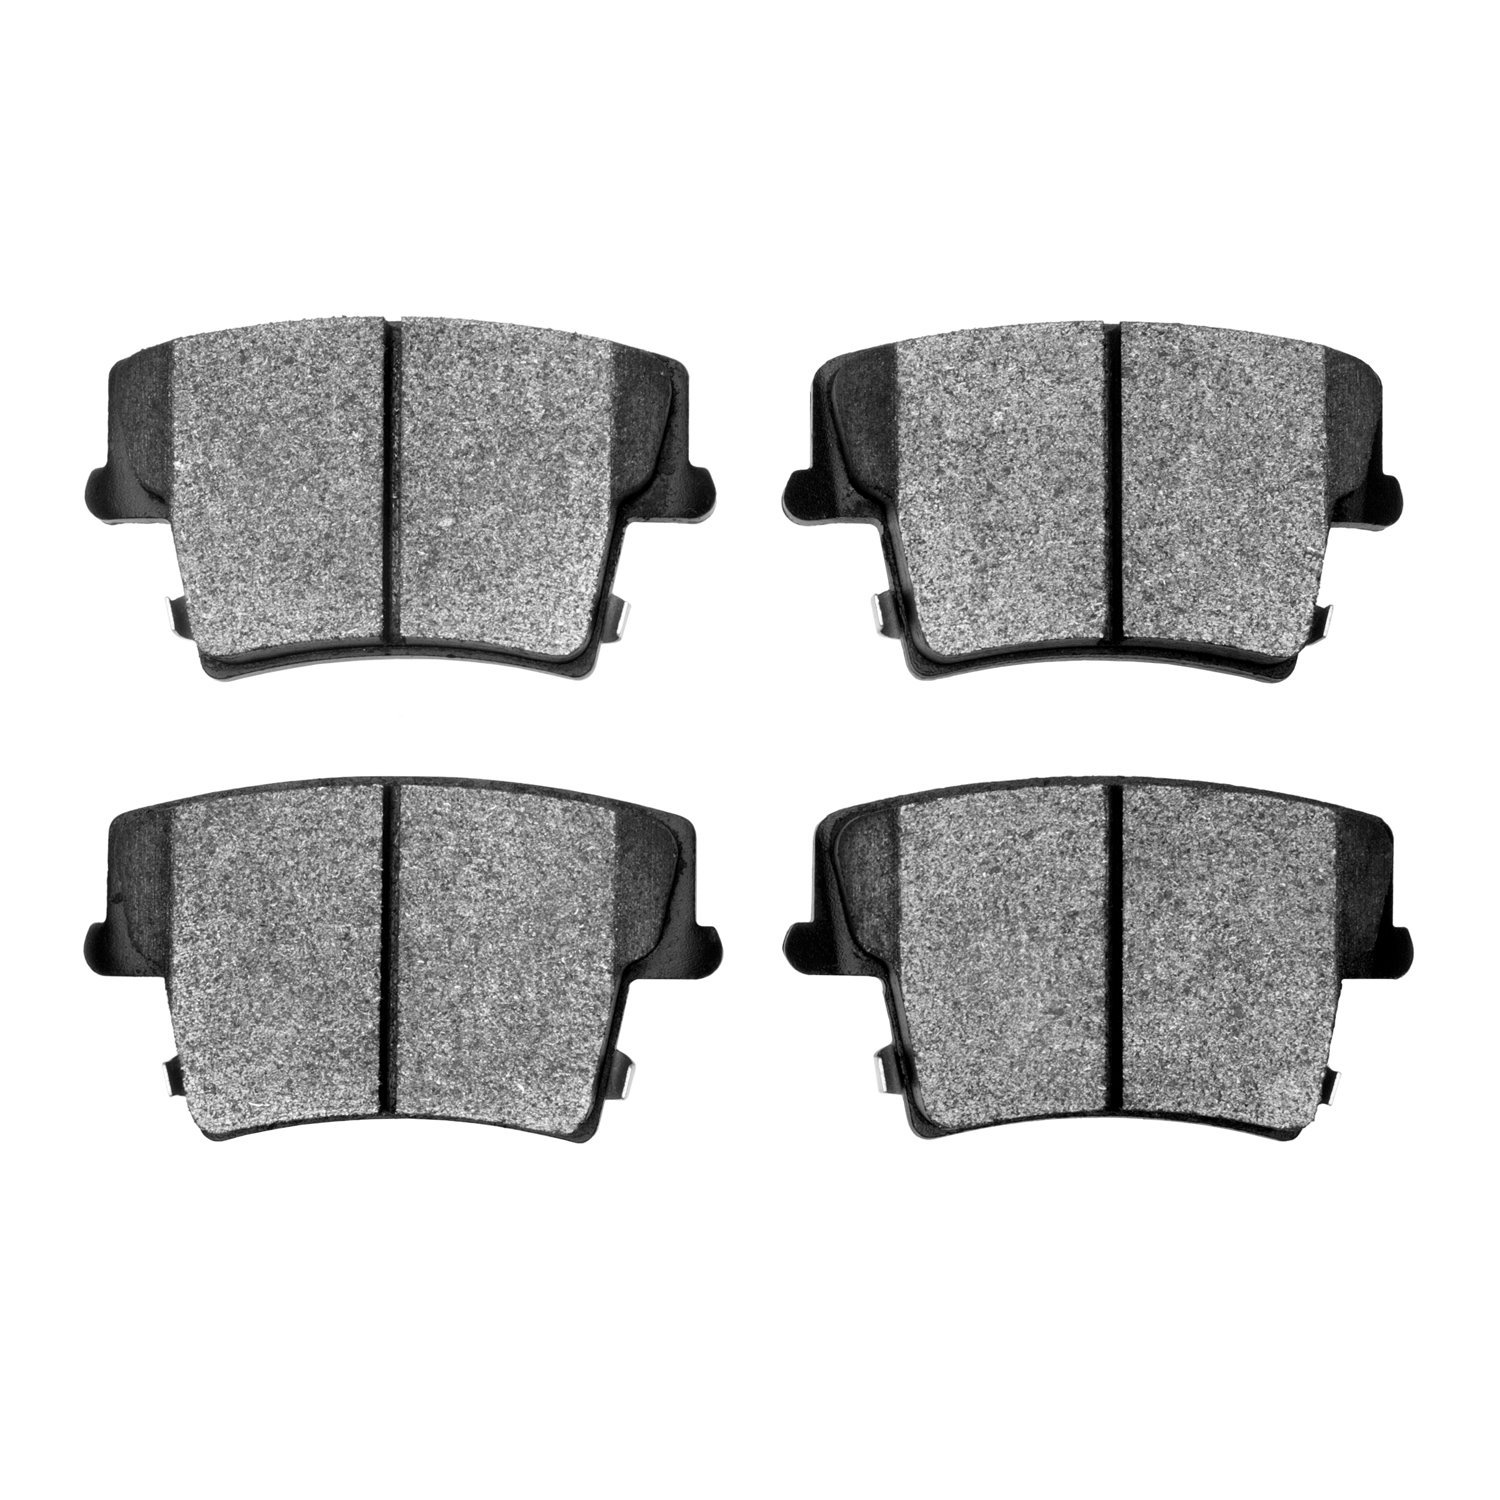 1551-1057-00 5000 Advanced Ceramic Brake Pads, Fits Select Mopar, Position: Rear